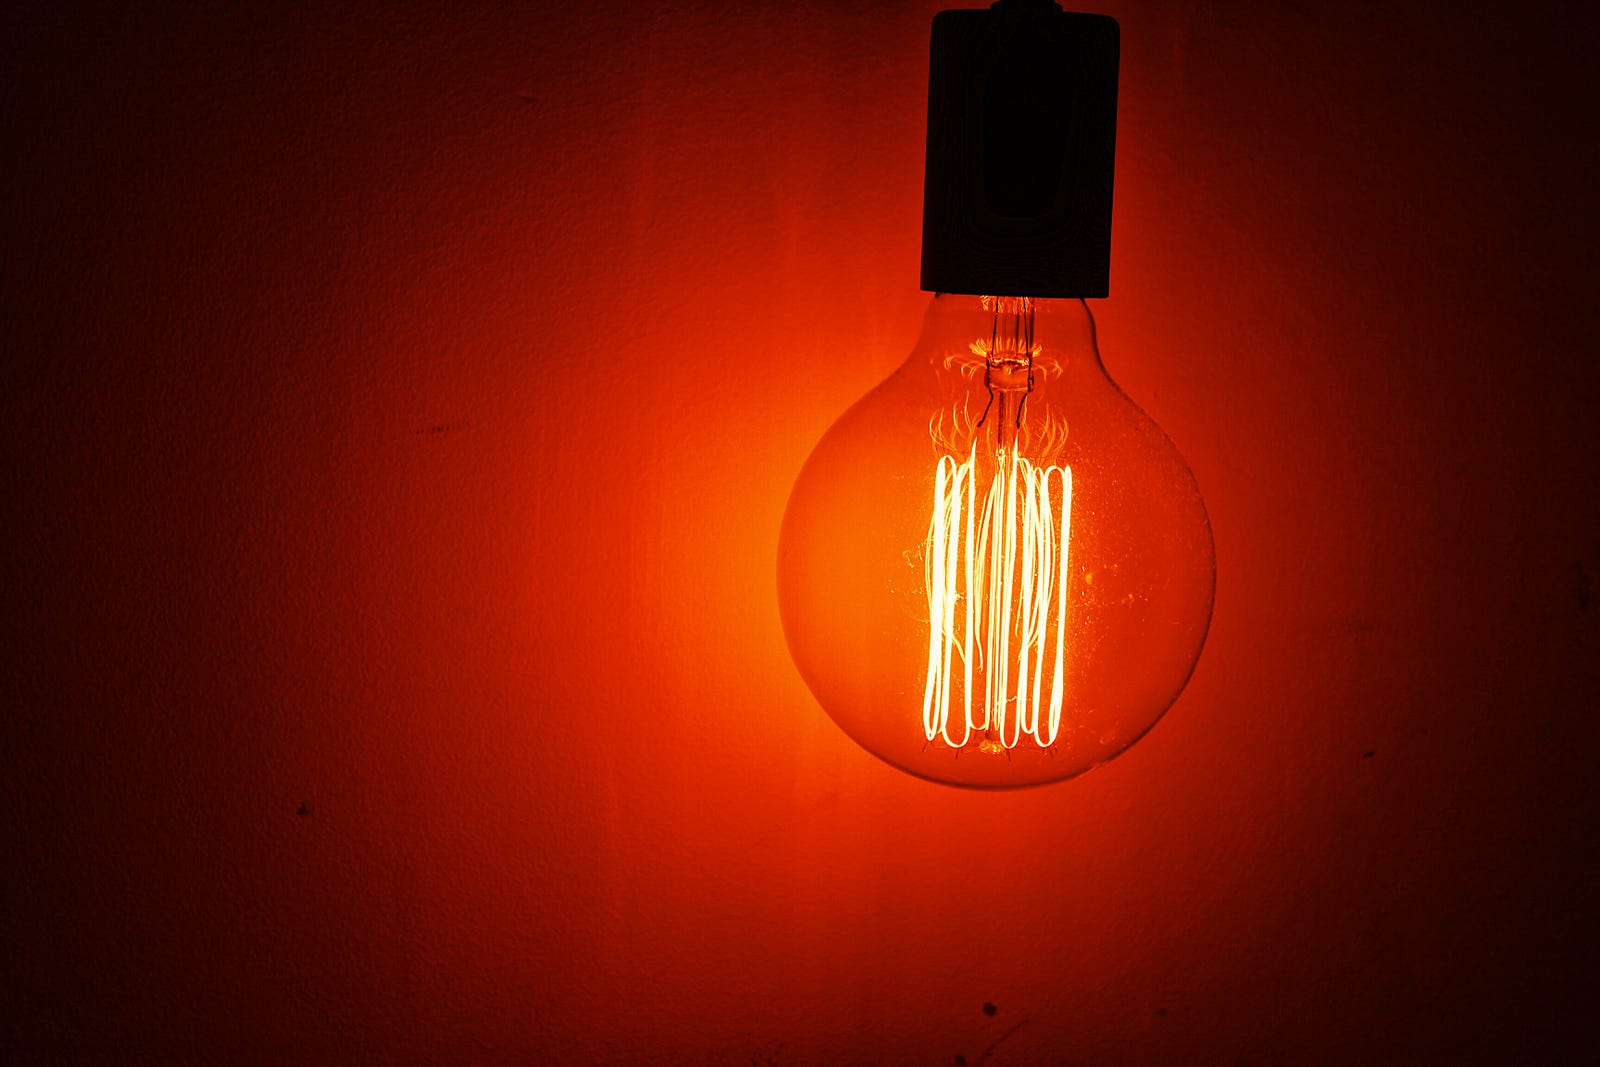 Incandescent Lightbulb. Thomas Edison embraced the Seck